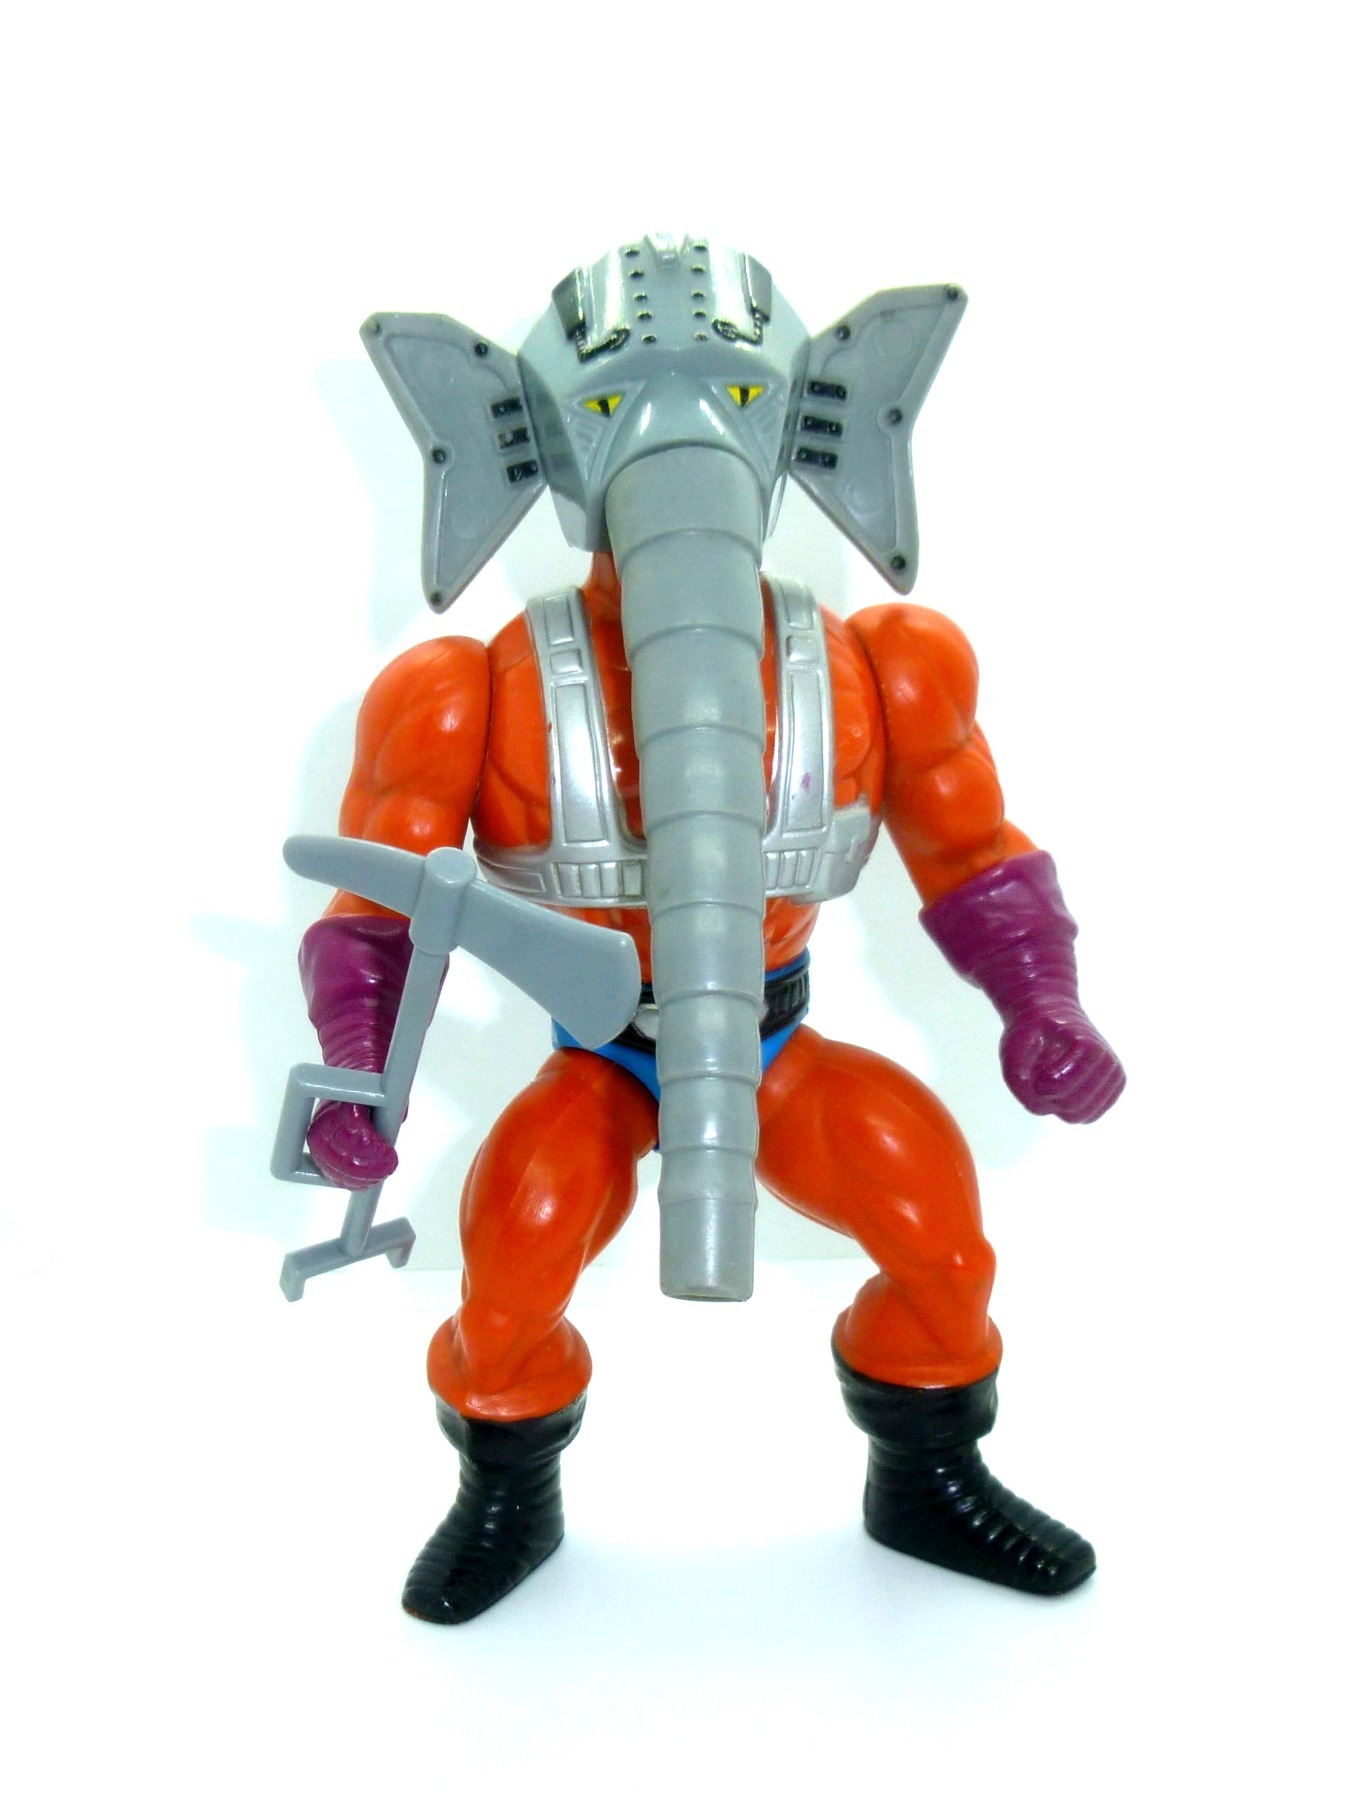 Snout Spout / Elephantor Komplett, Mattel, Inc. 1985